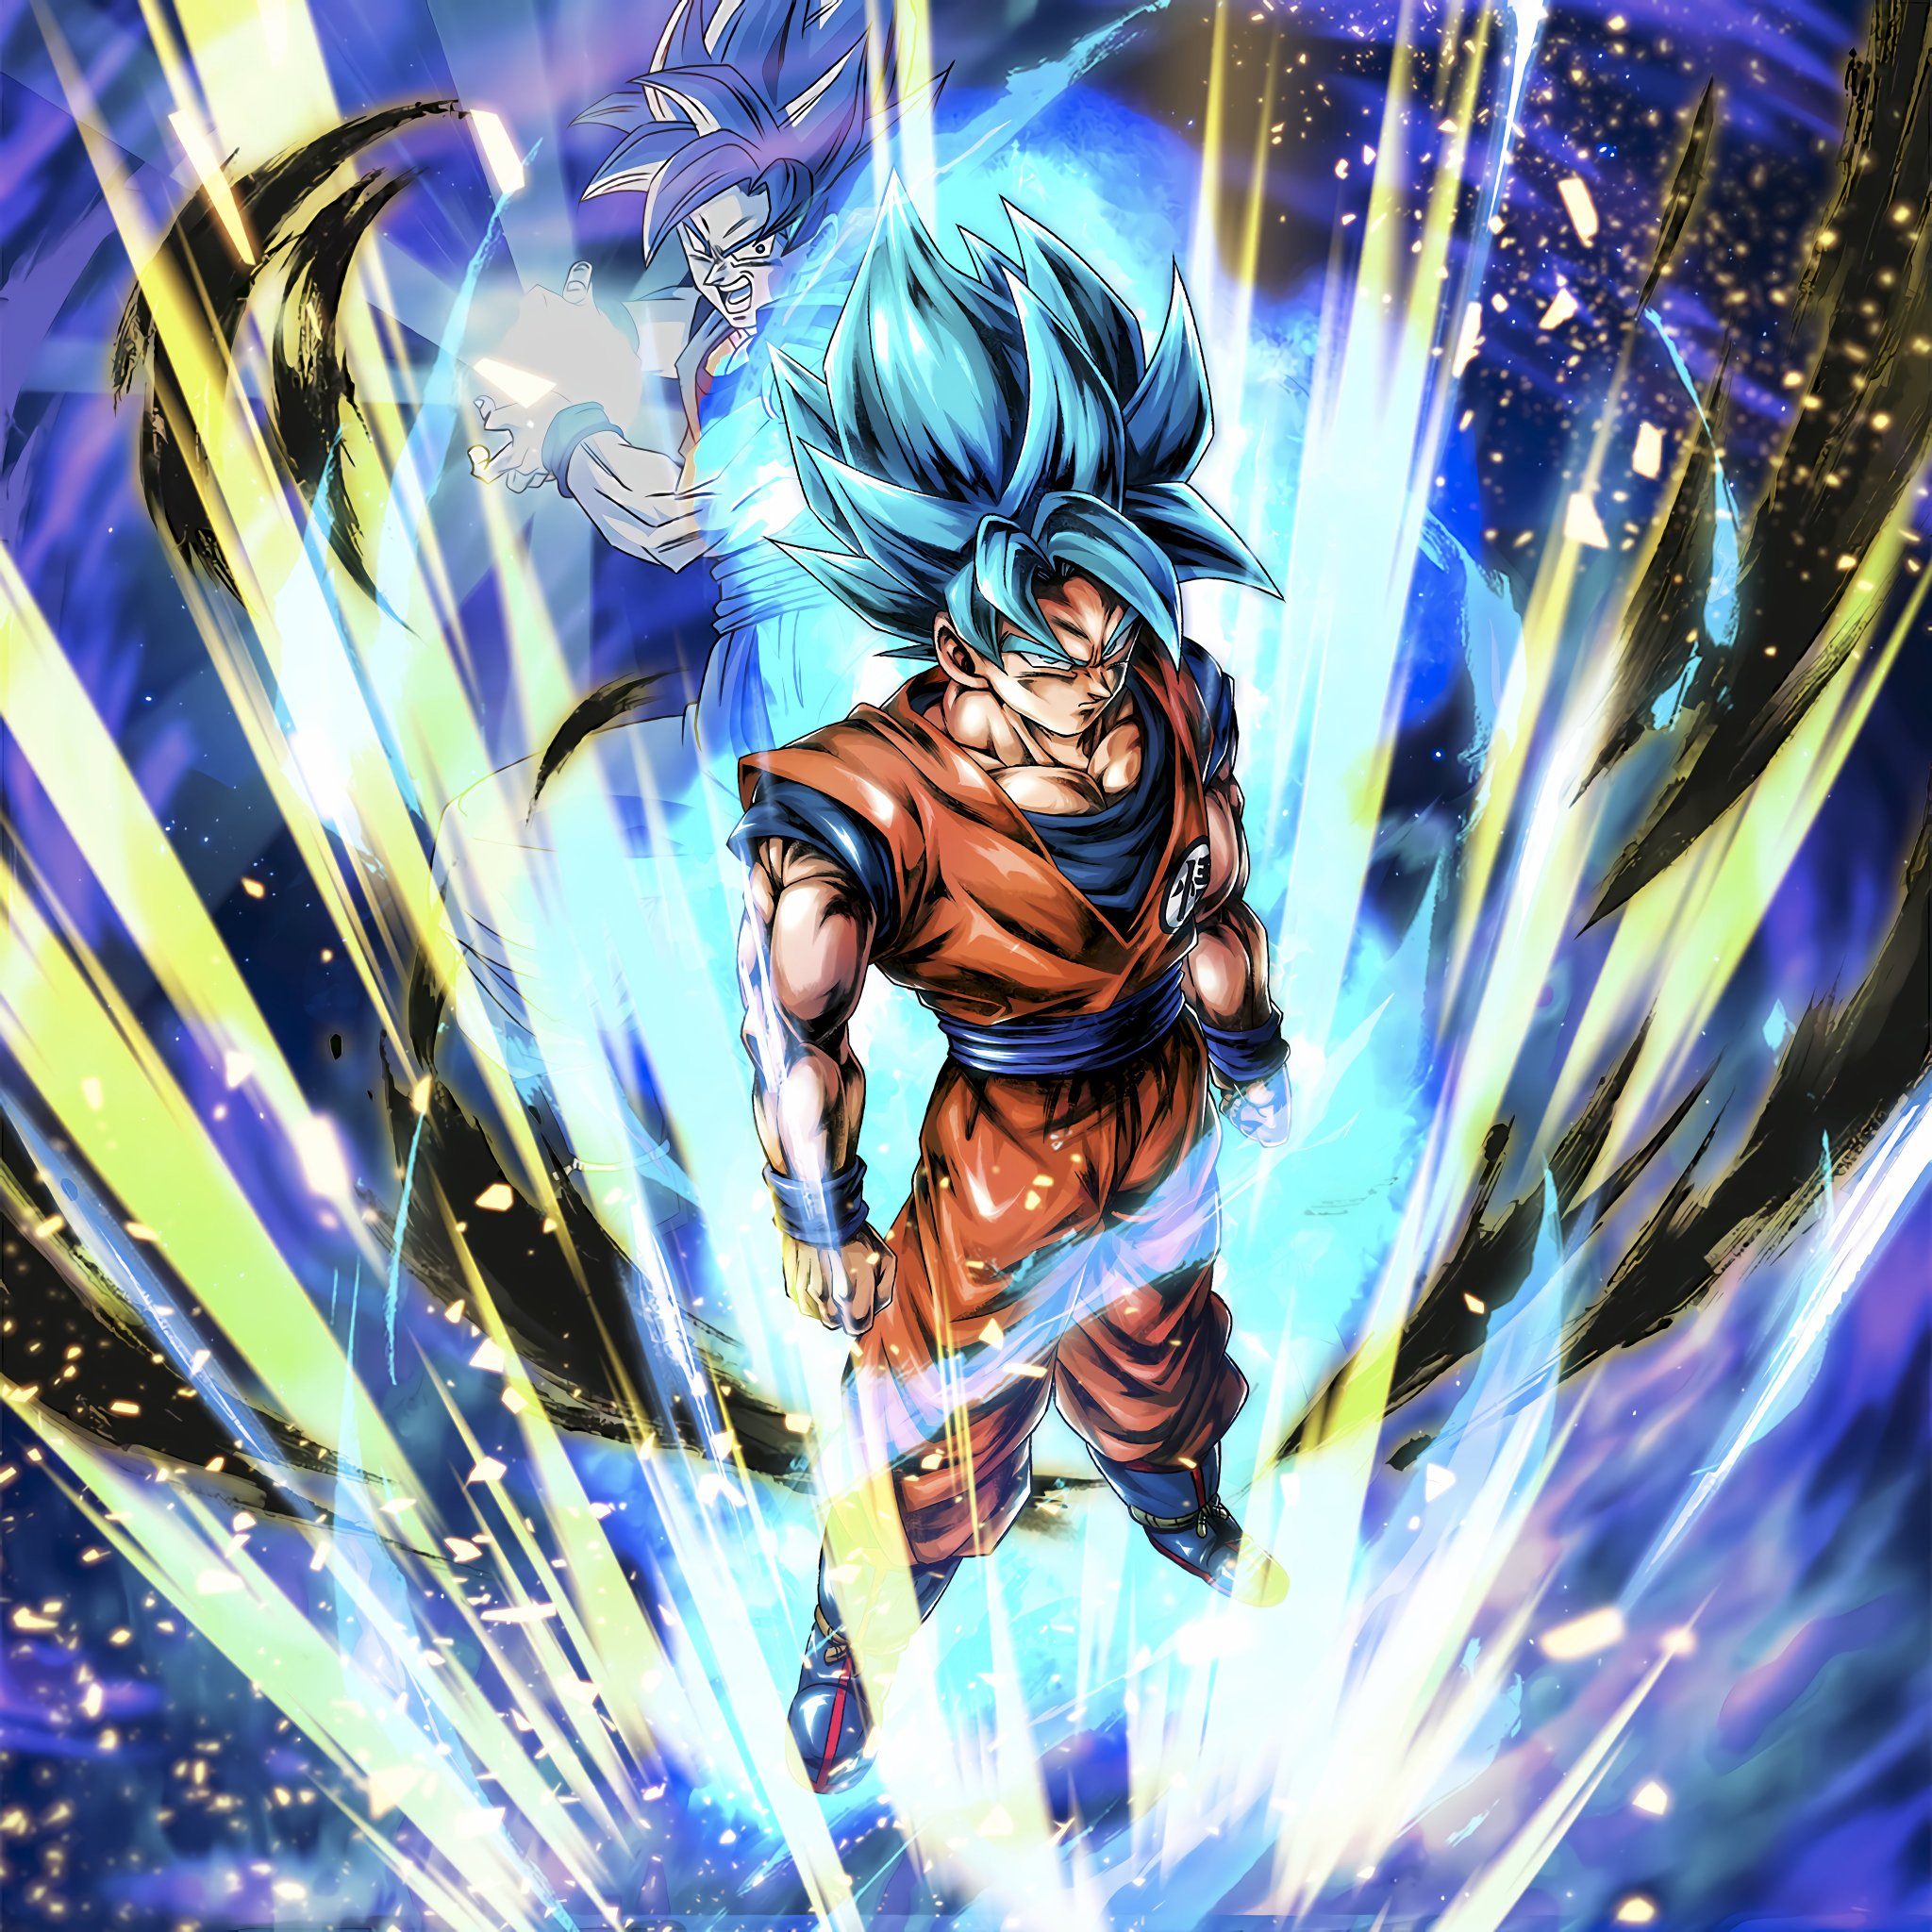 Rénaldo  on X: That new Goku Blue Artwork looks epic 🔥   / X